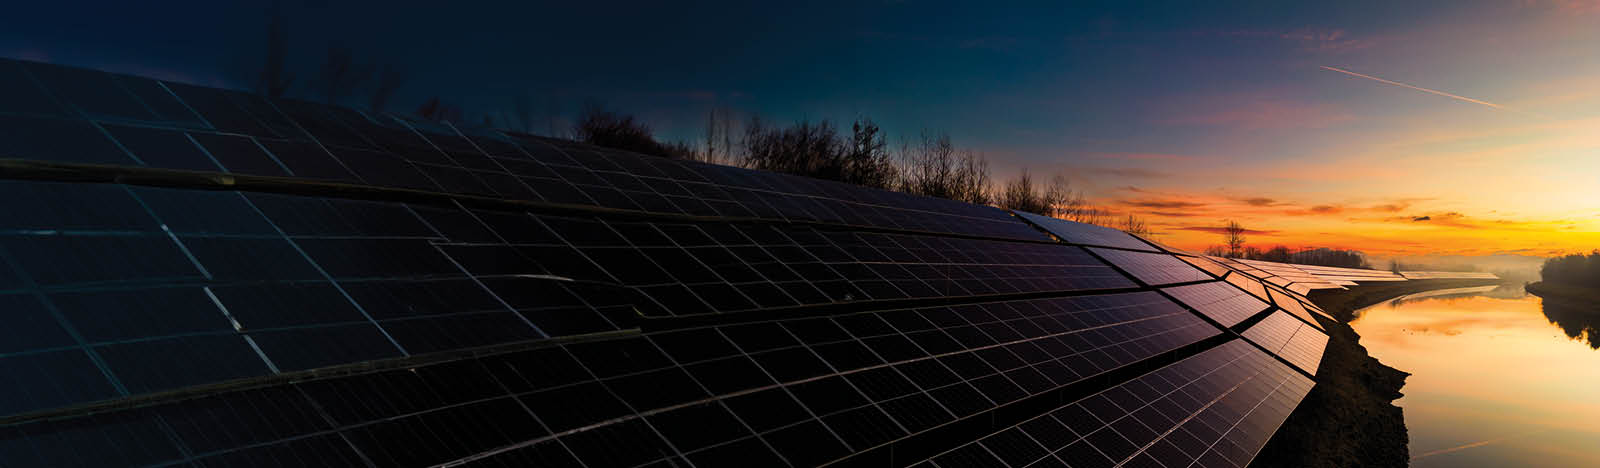 ESG CIB Solar-Sunset image set